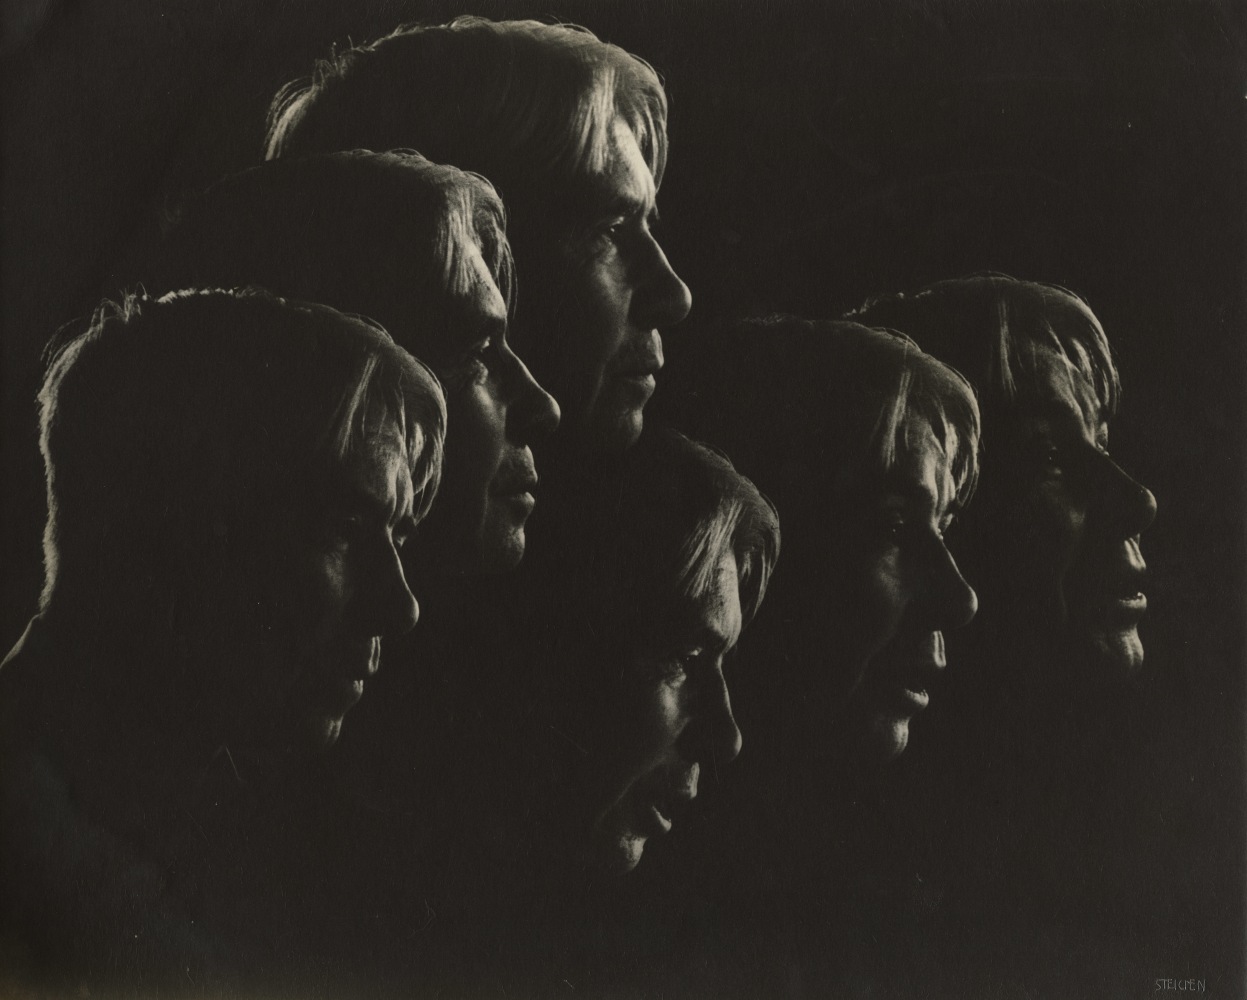 Edward STEICHEN (American, born in Luxembourg, 1879-1973) Carl Sandburg, 1936 Gelatin silver print 30.2 x 37.4 cm